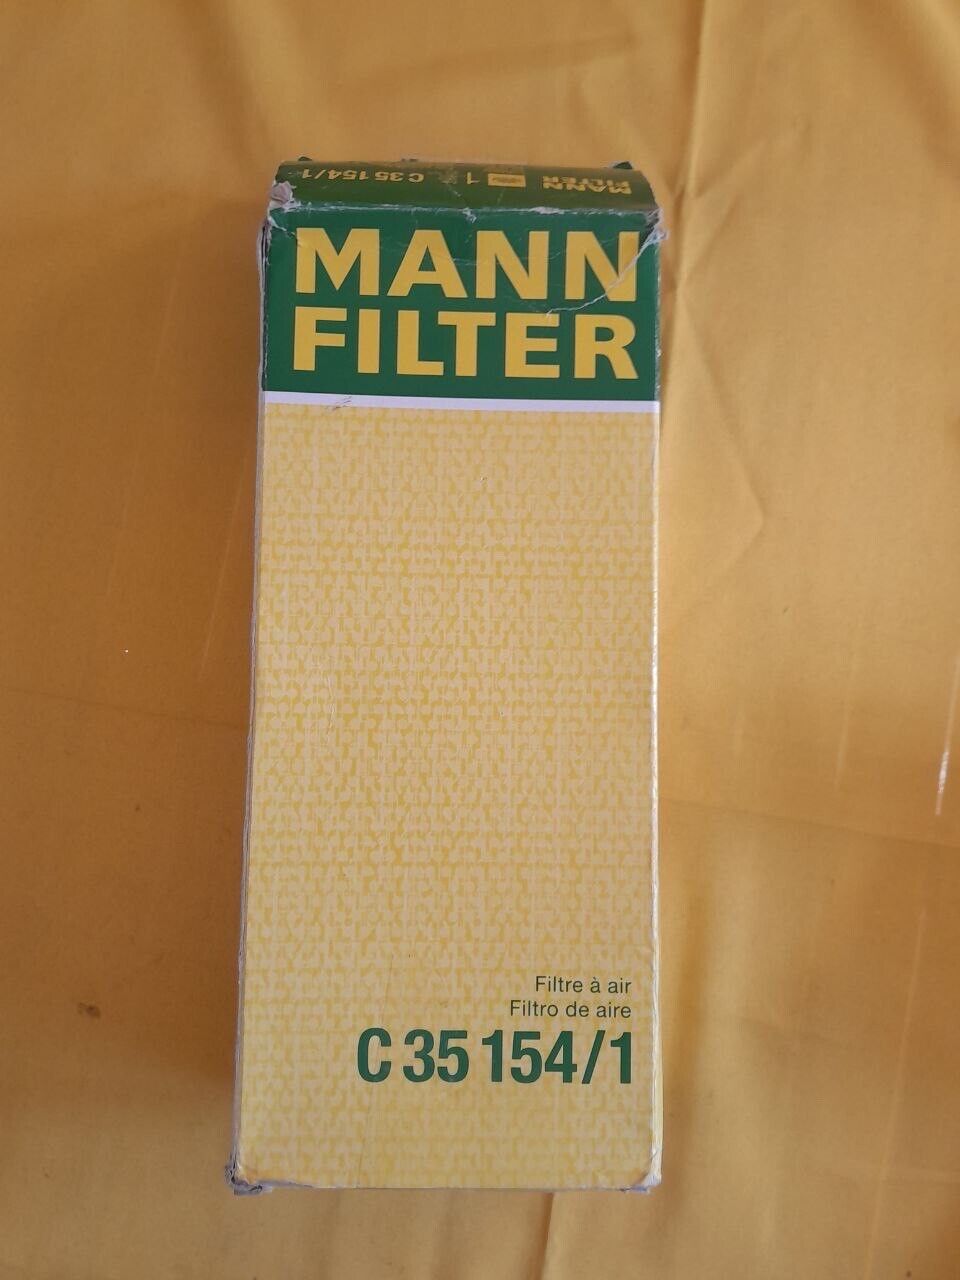 NEW Filter Main Air Filter MANN Replacement C 35 154 /1 Audi Volkswagen Skoda S7